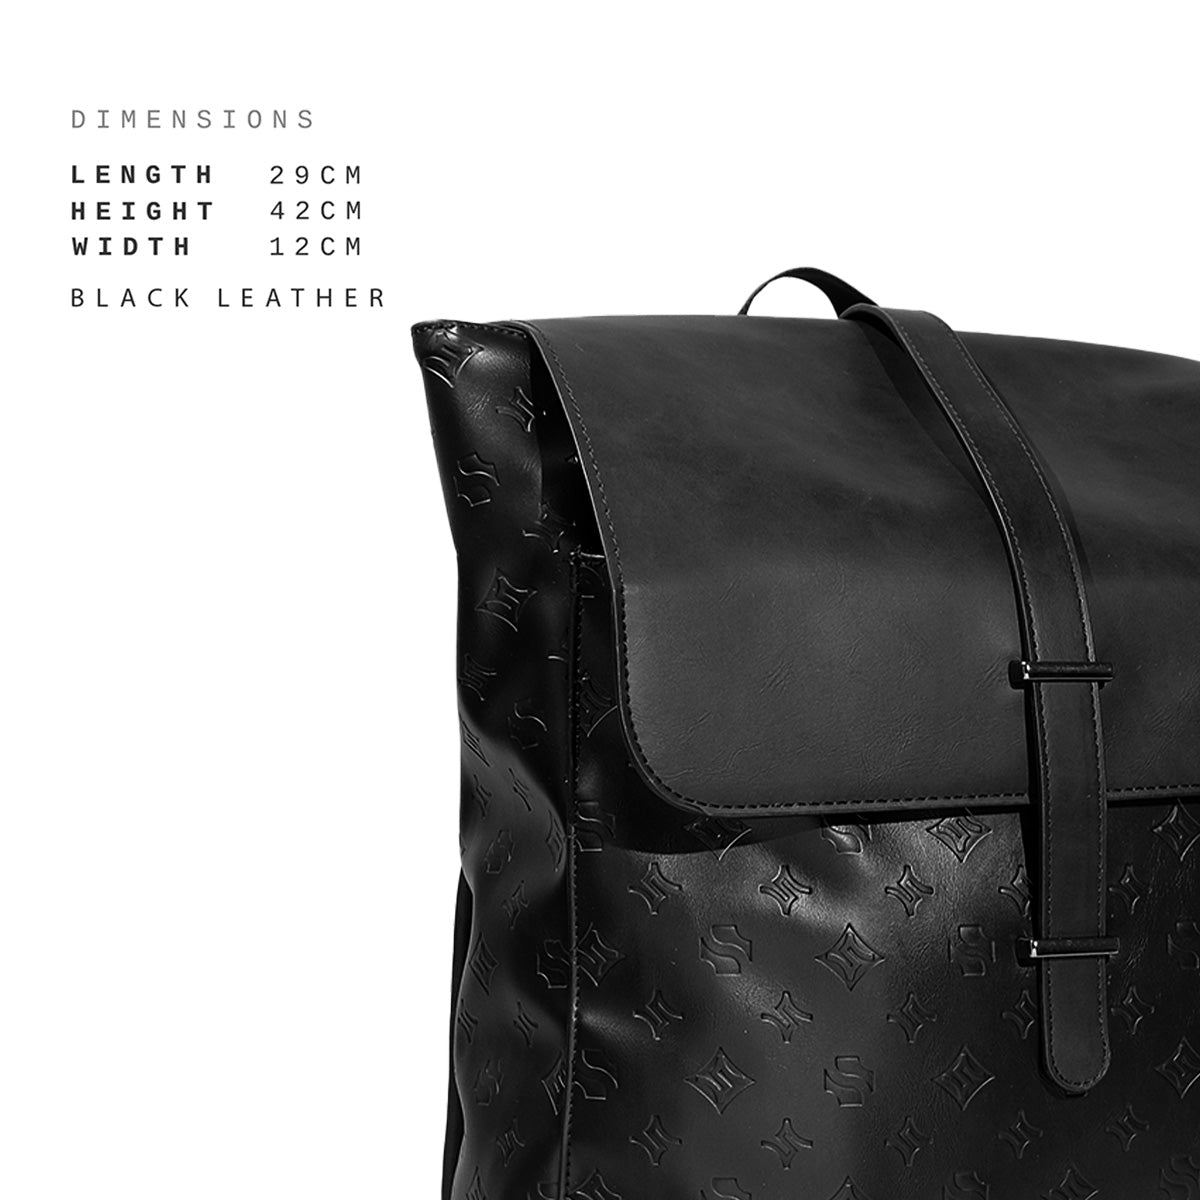 Shigetsu HYUGA Debossed Monogram Bag Leather Backpack for School men